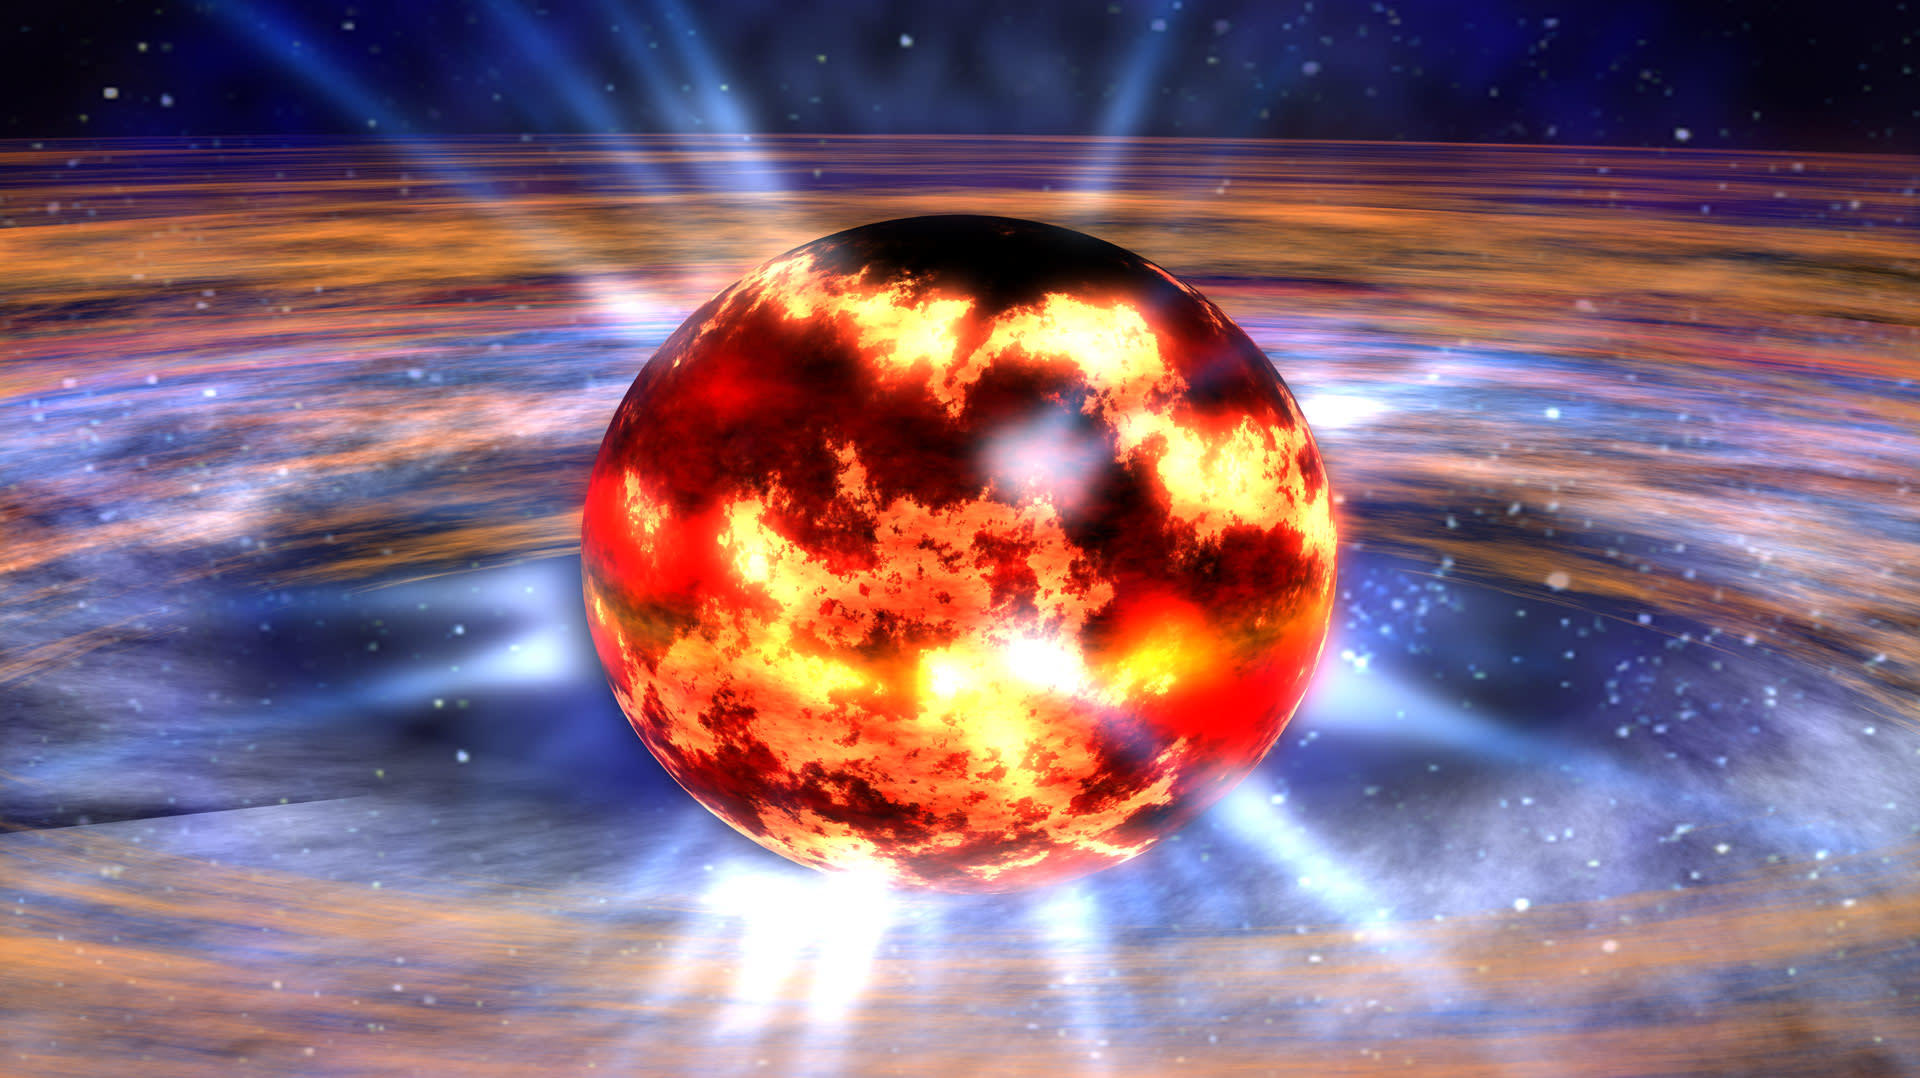 Artist's conception of a neutron star. (Image: NASA)